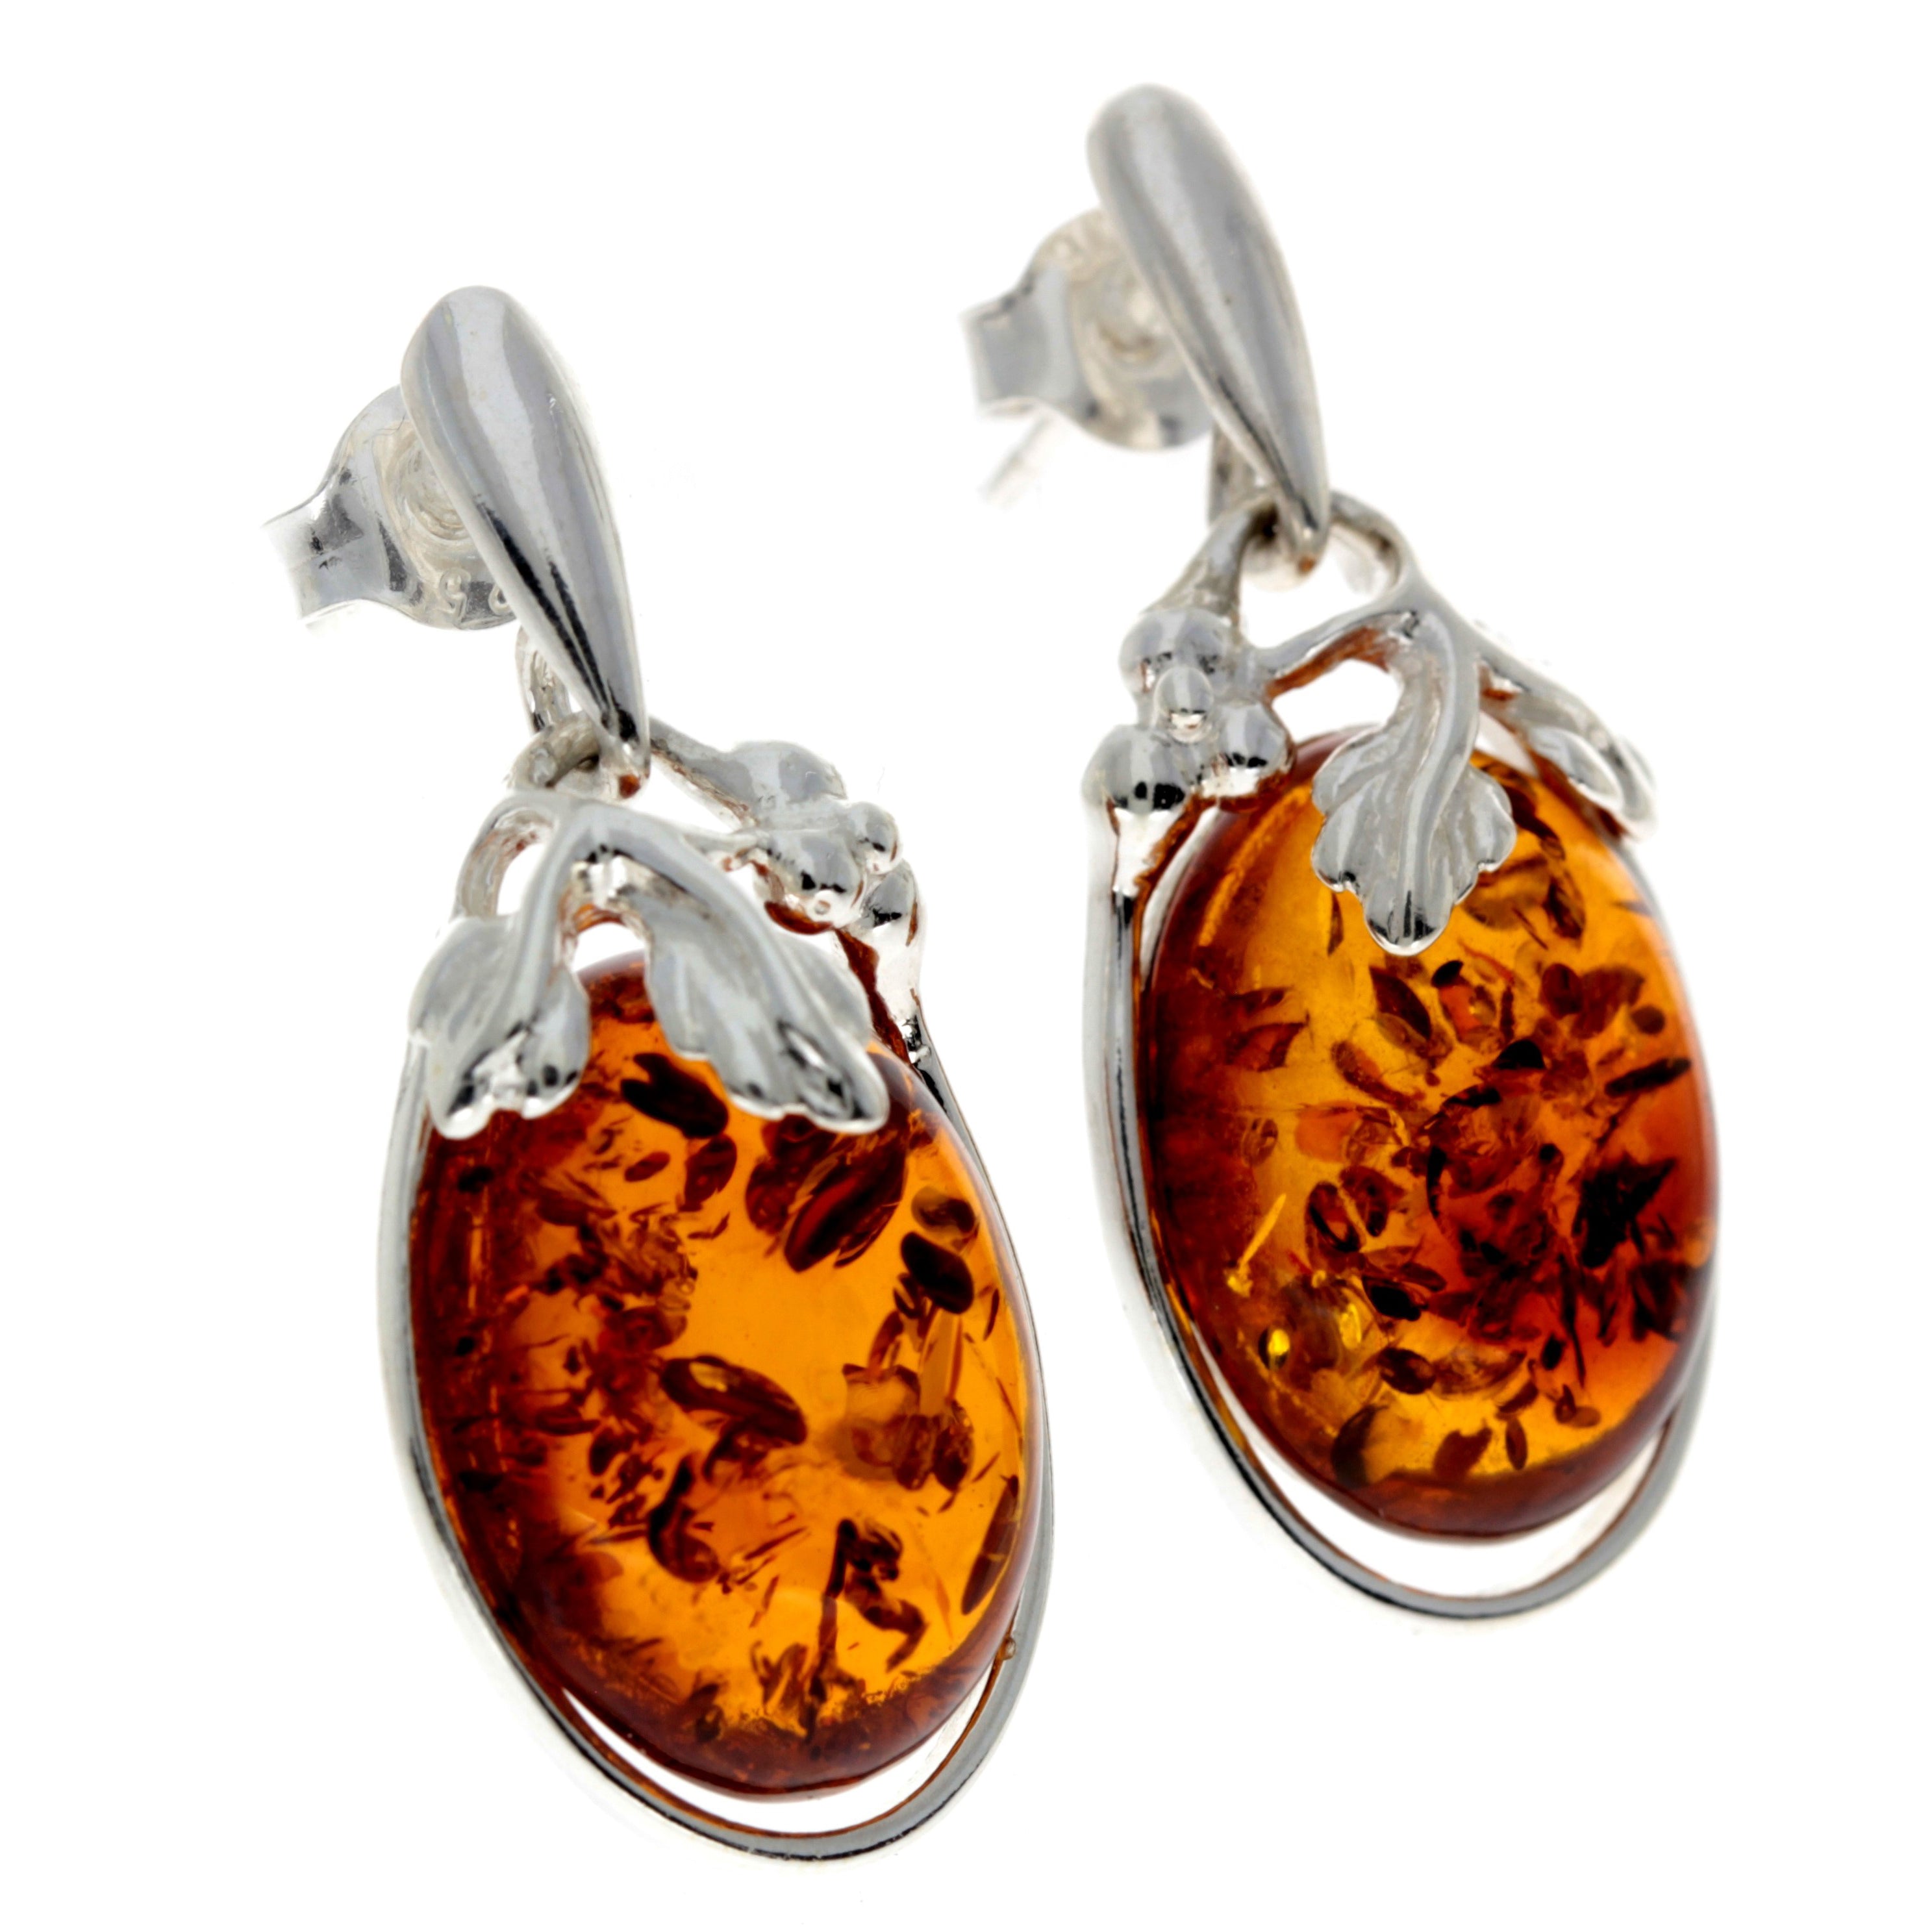 925 Sterling Silver & Genuine Baltic Amber Large Drop Earrings - GL190